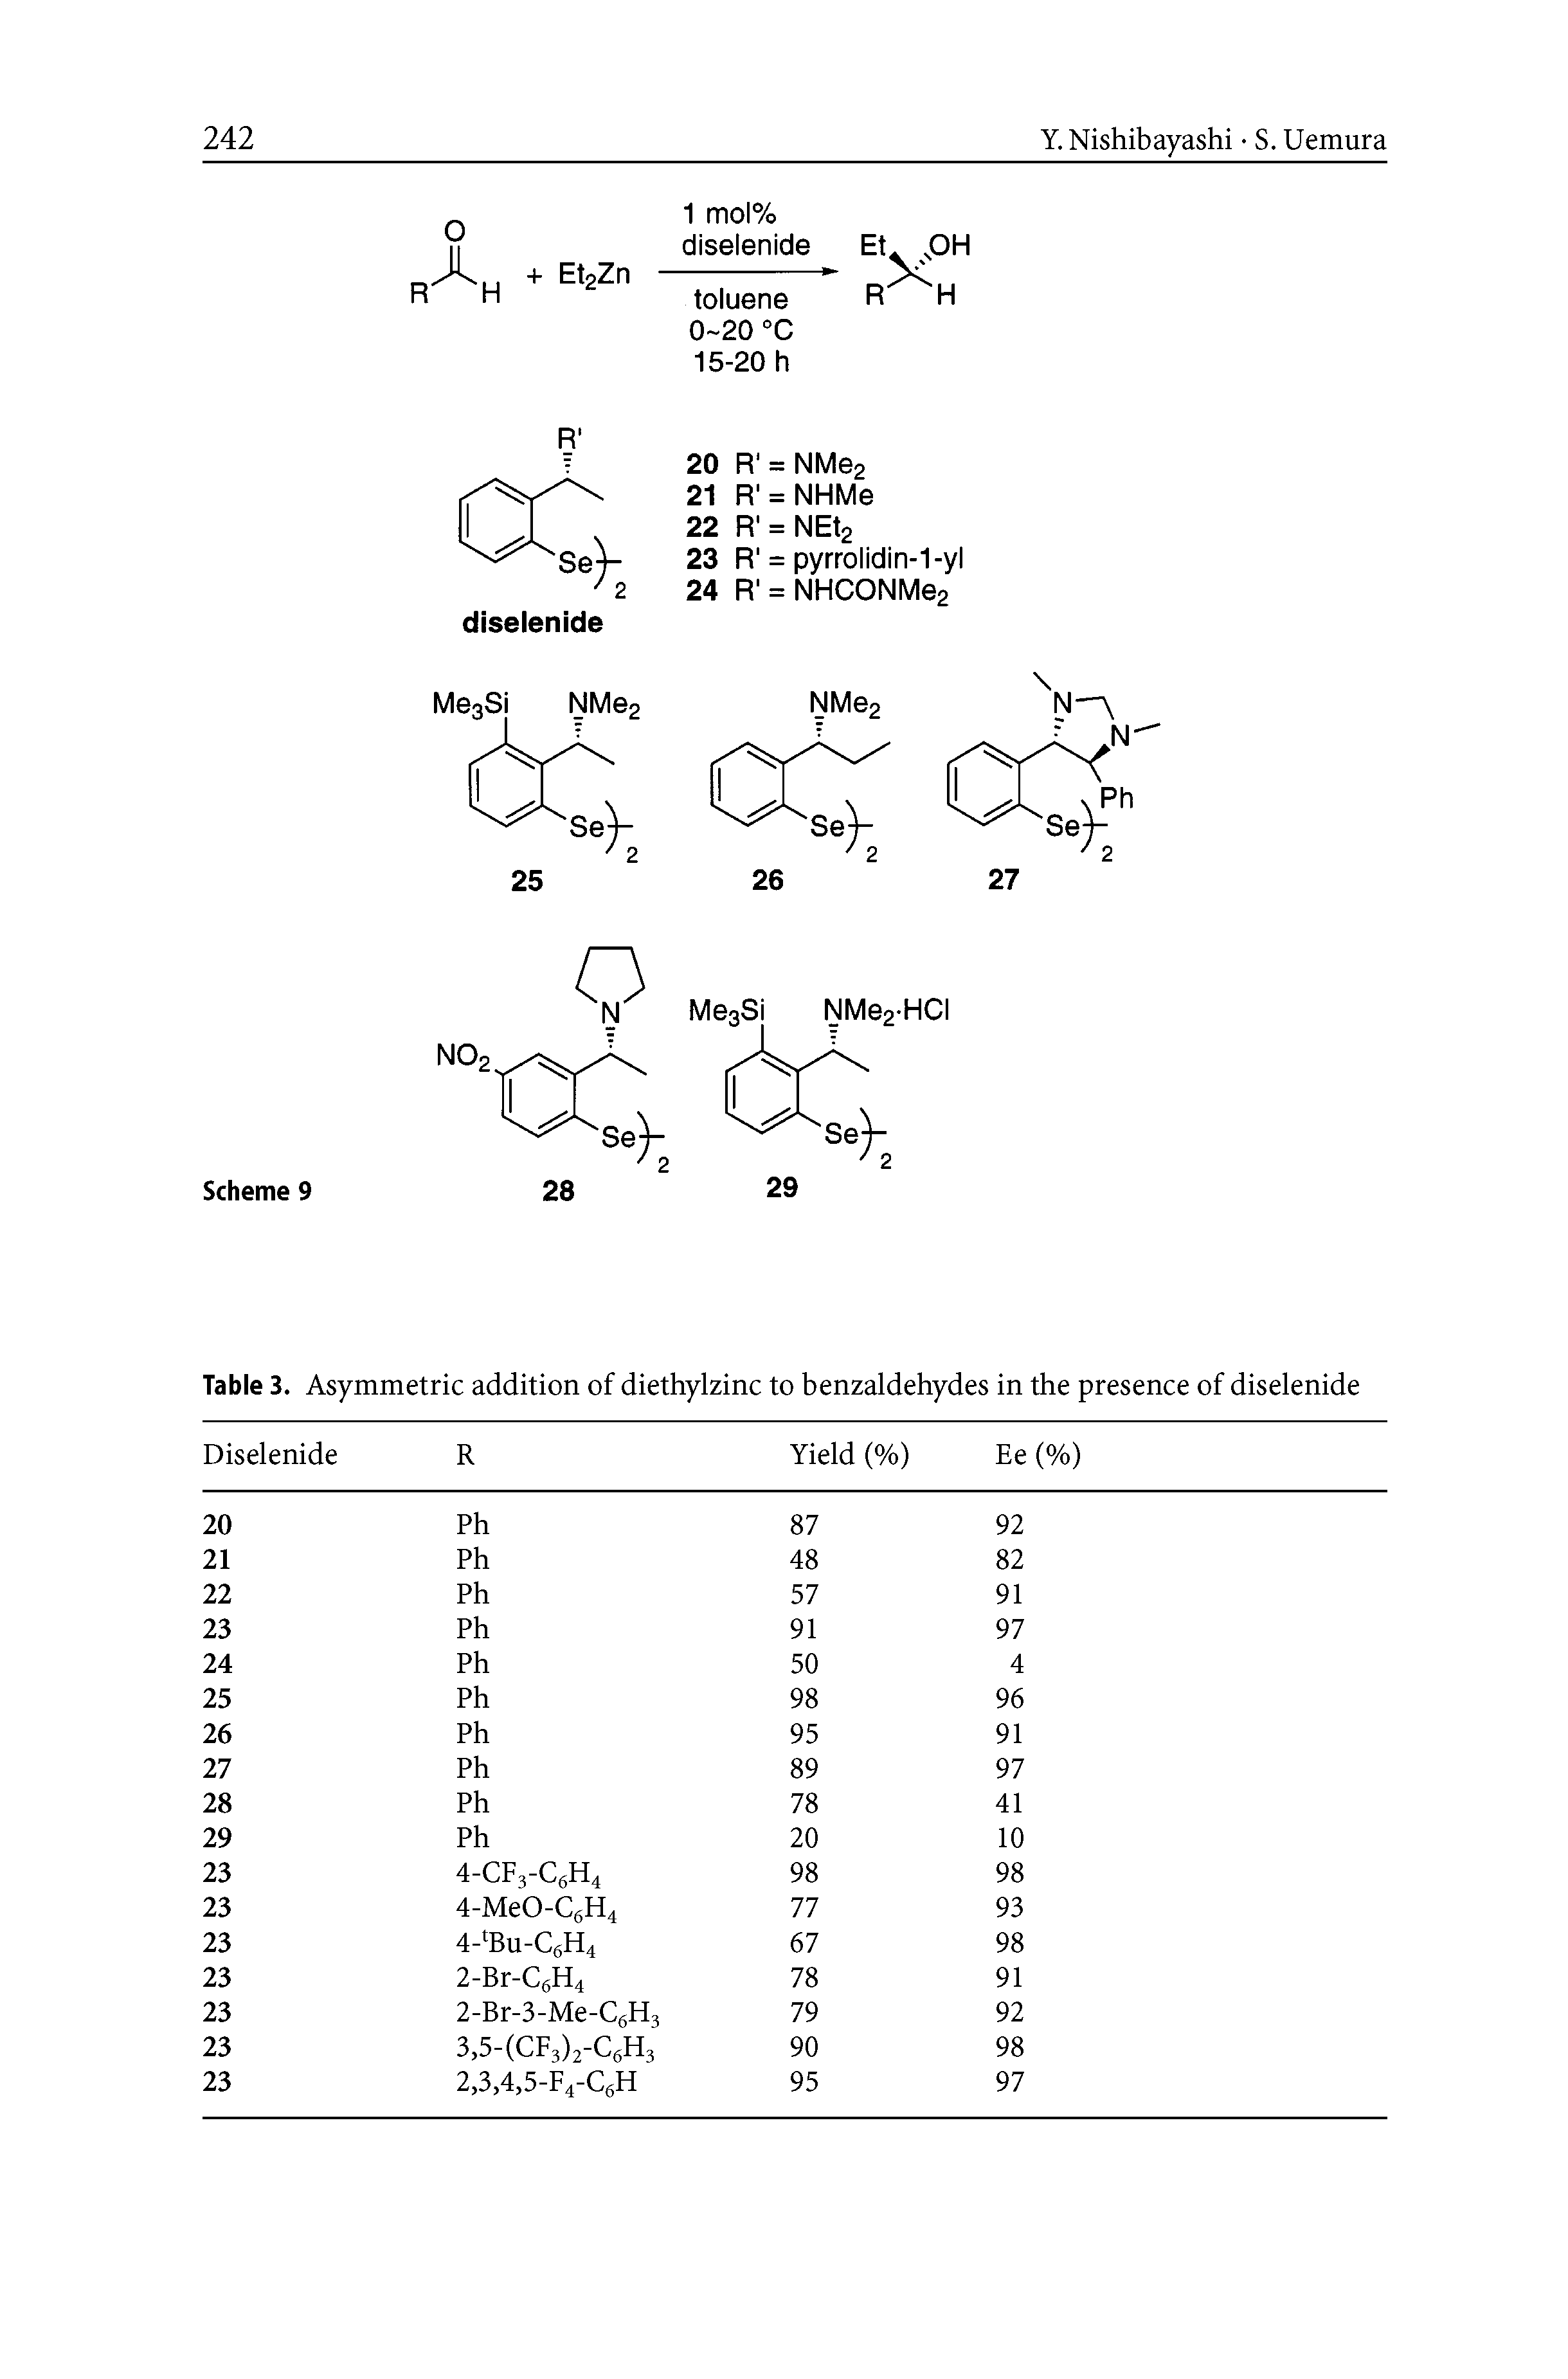 Table 3. Asymmetric addition of diethylzinc to benzaldehydes in tbe presence of diselenide...